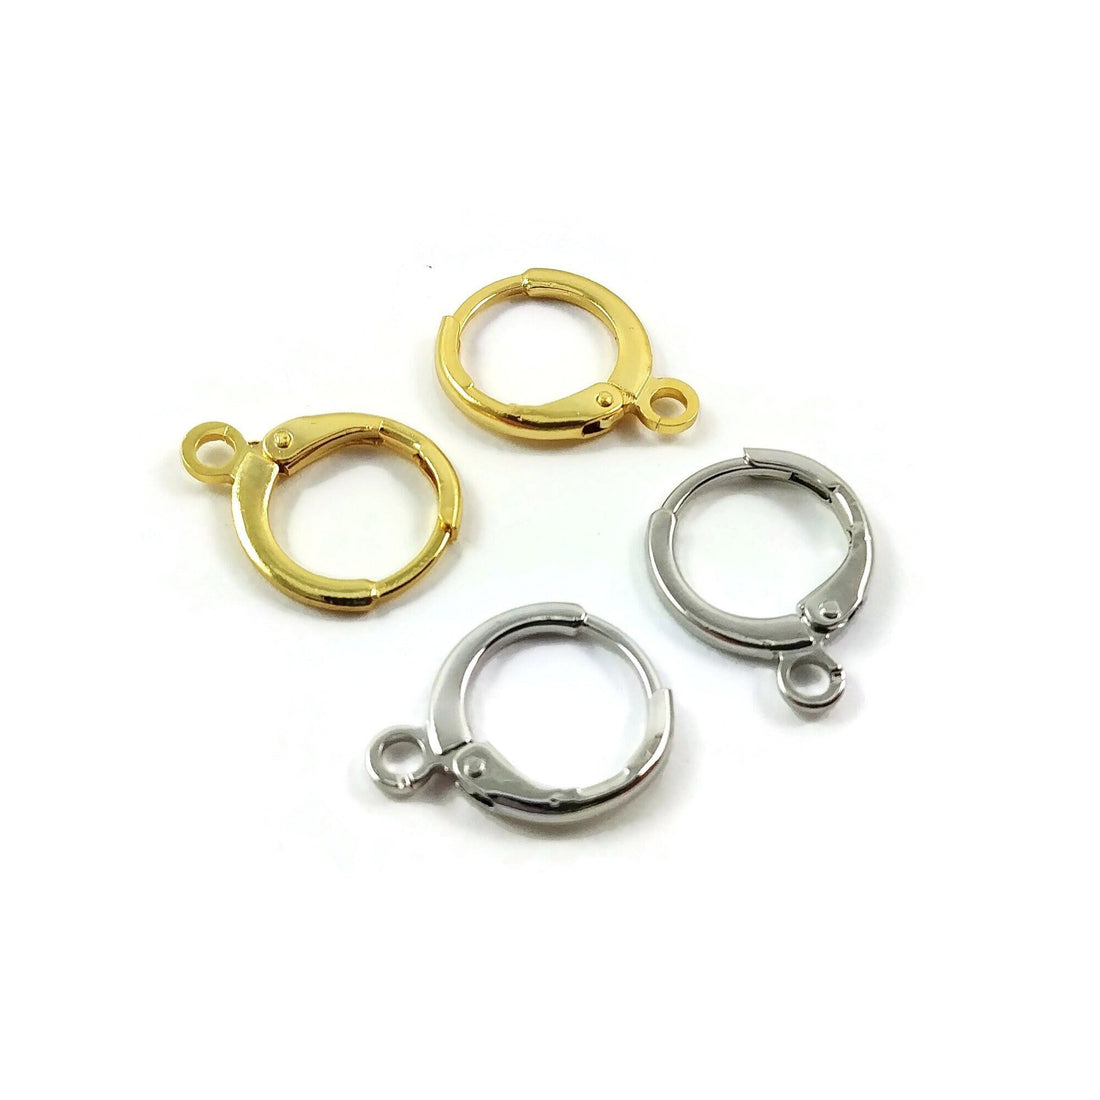 Huggie hoops with loop, Nickel free earring findings, Long-lasting plated, Lever back for jewelry making